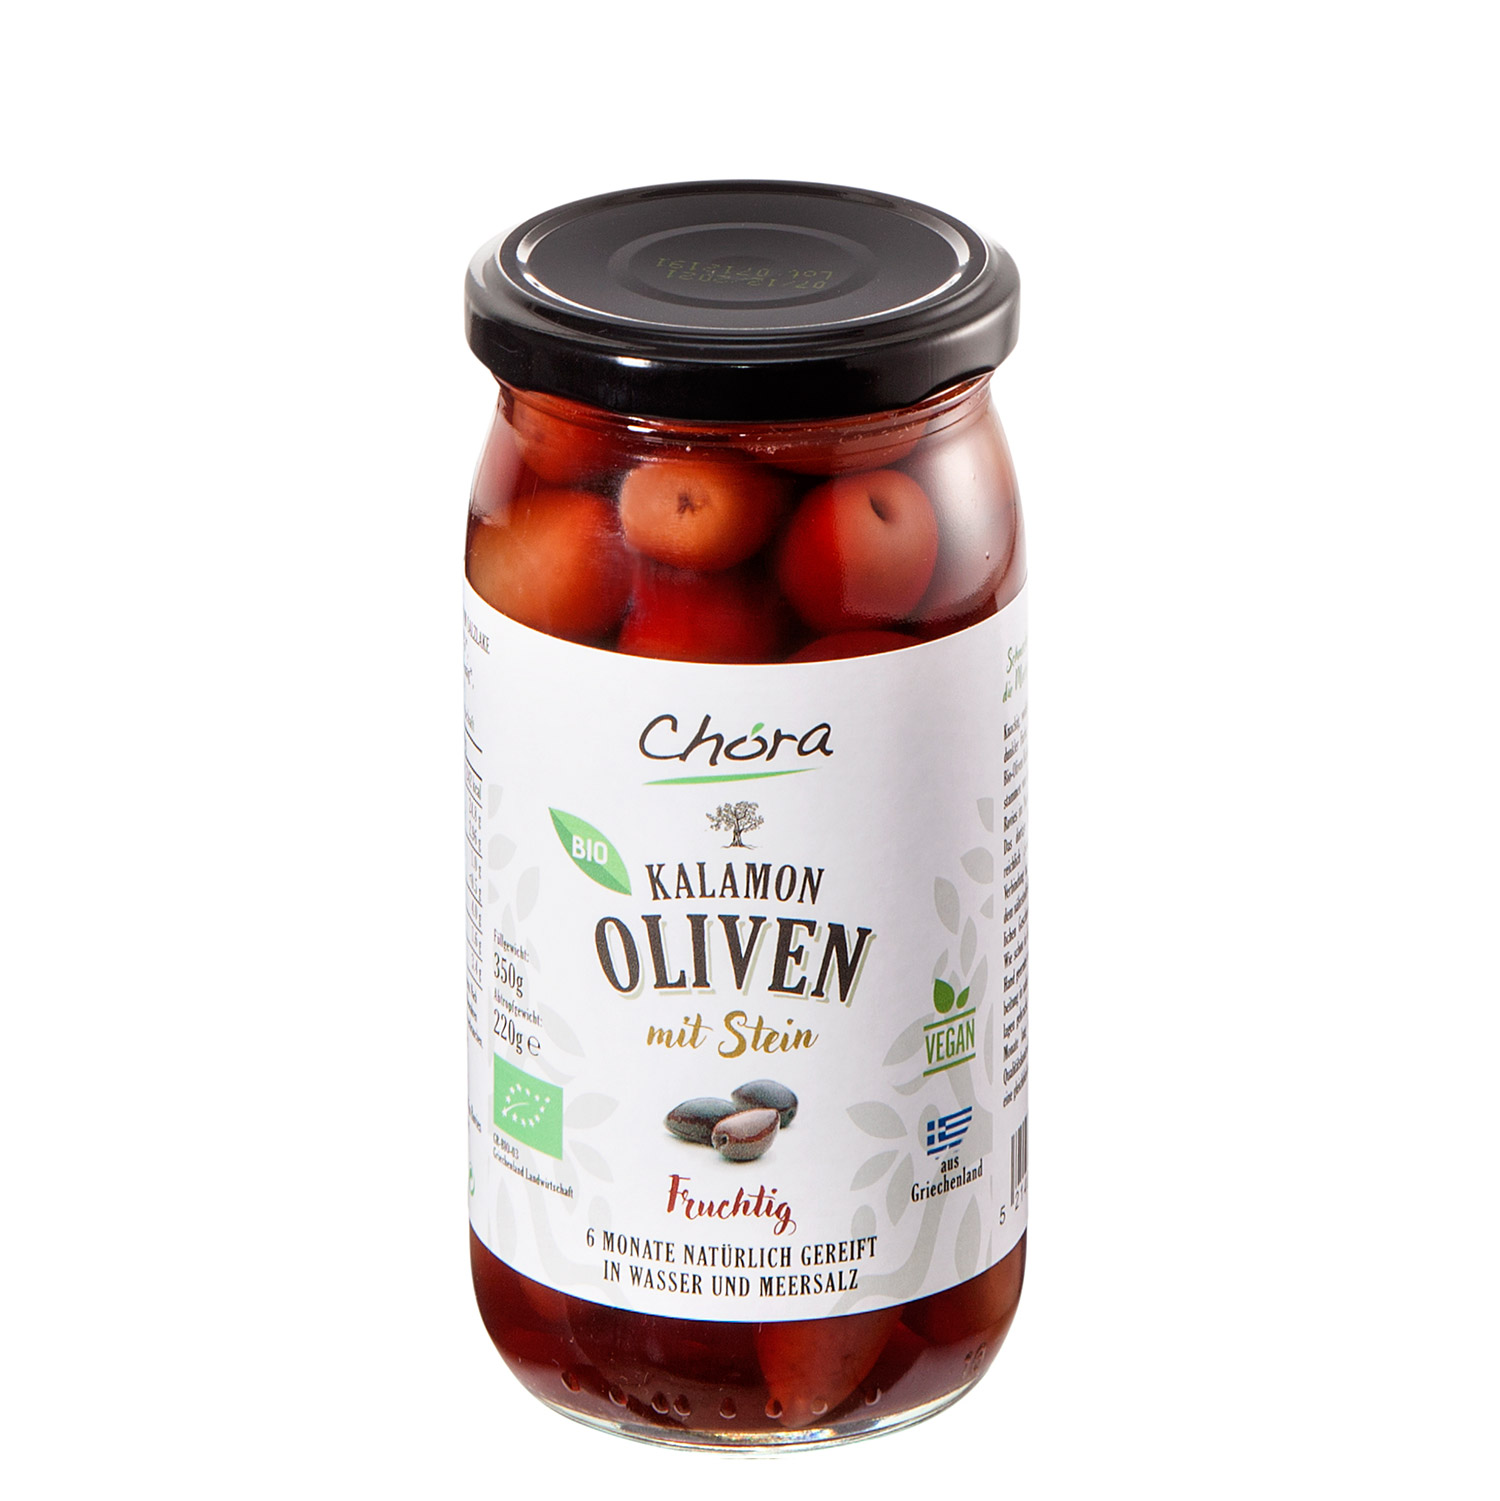 Bio-Oliven kalamon mit Stein